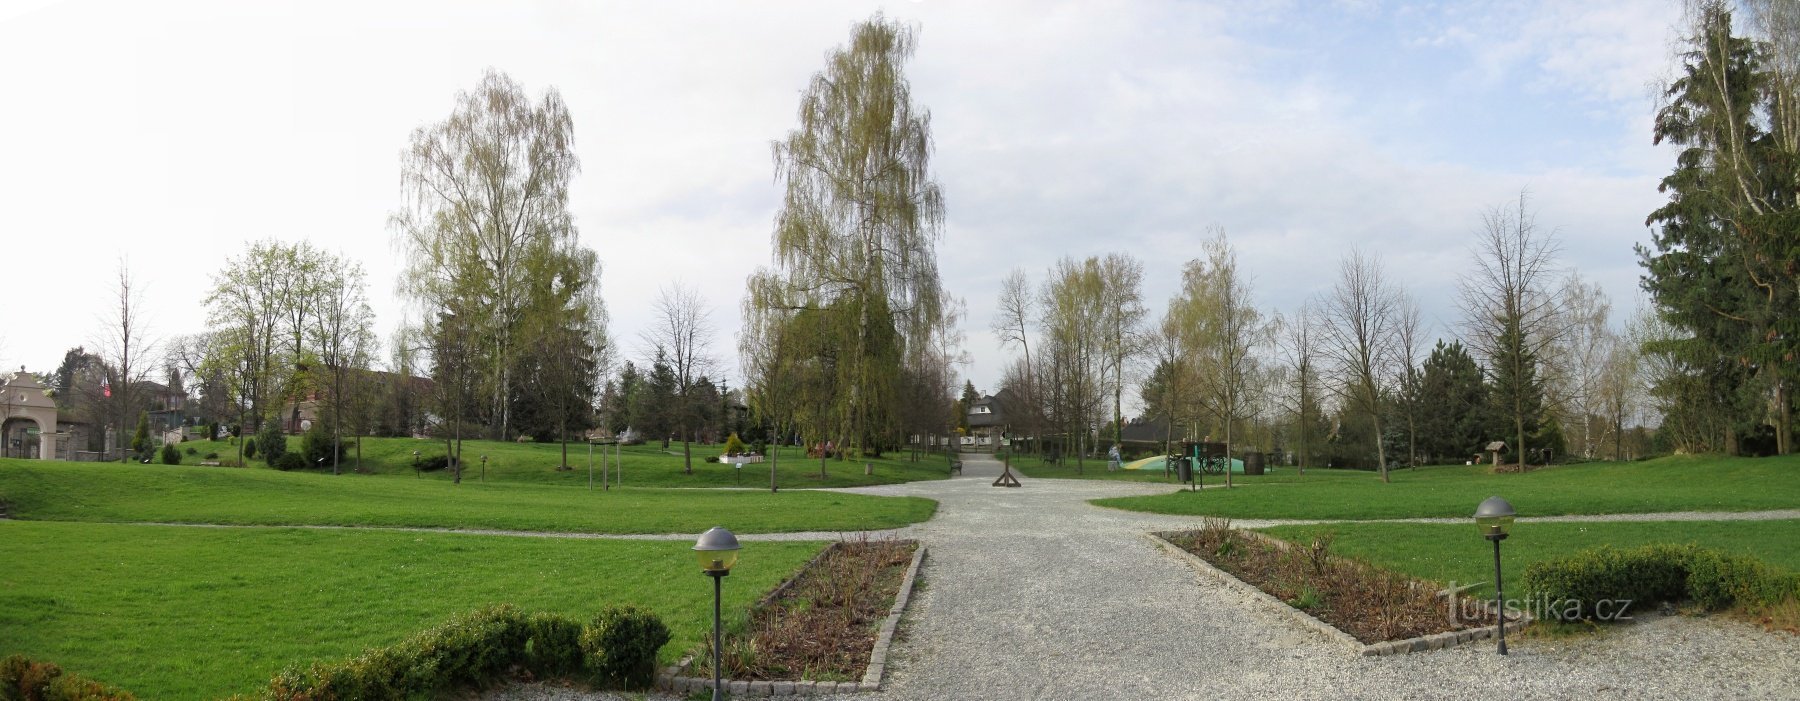 Kunice - Berchtold 城、ミニチュアの城と教育トレイルのある公園